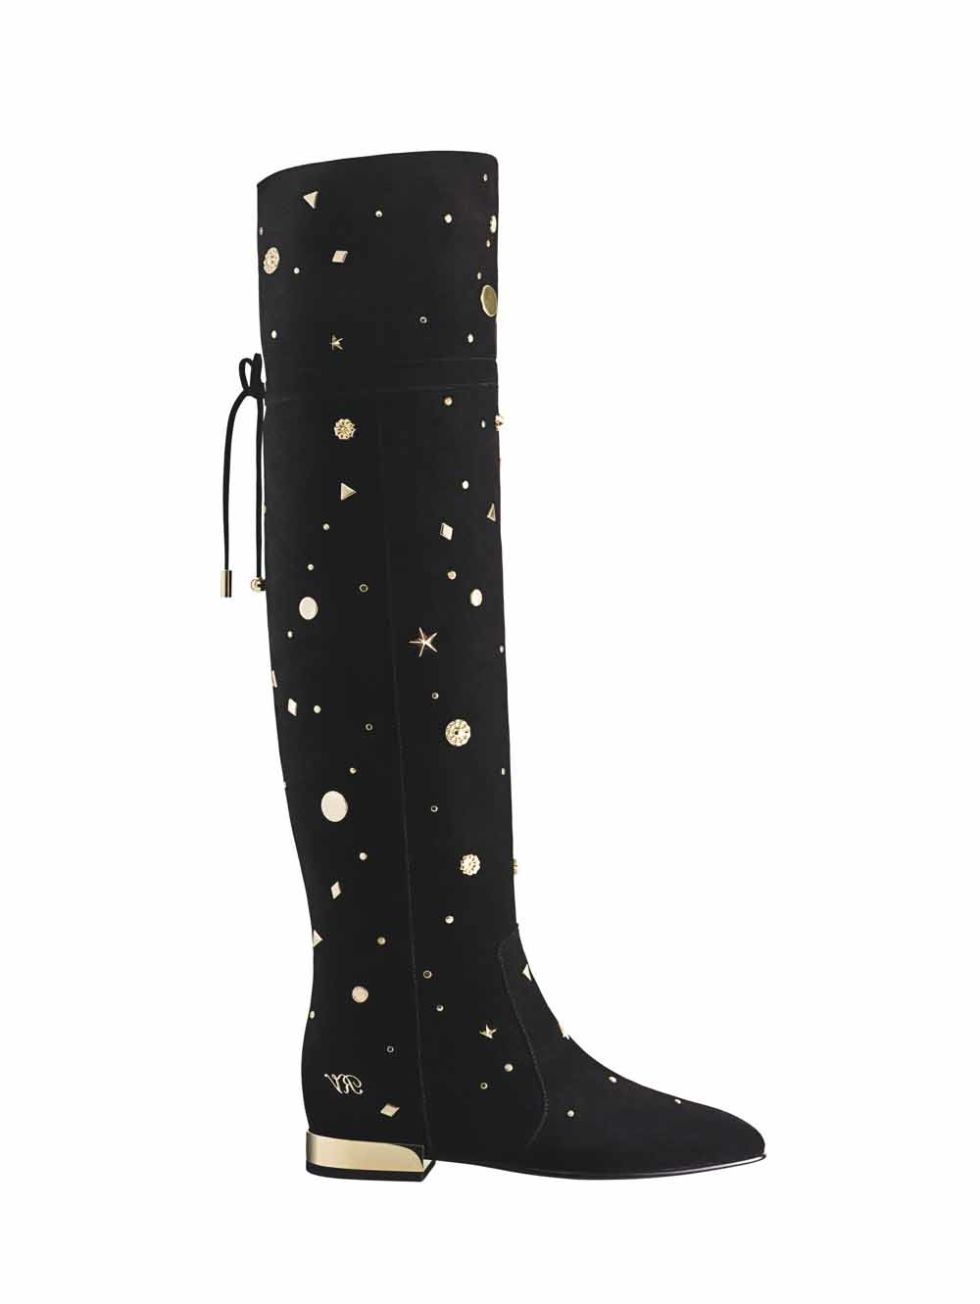 Footwear, Boot, Knee-high boot, Shoe, Riding boot, Design, Pattern, Rain boot, Polka dot, Durango boot, 